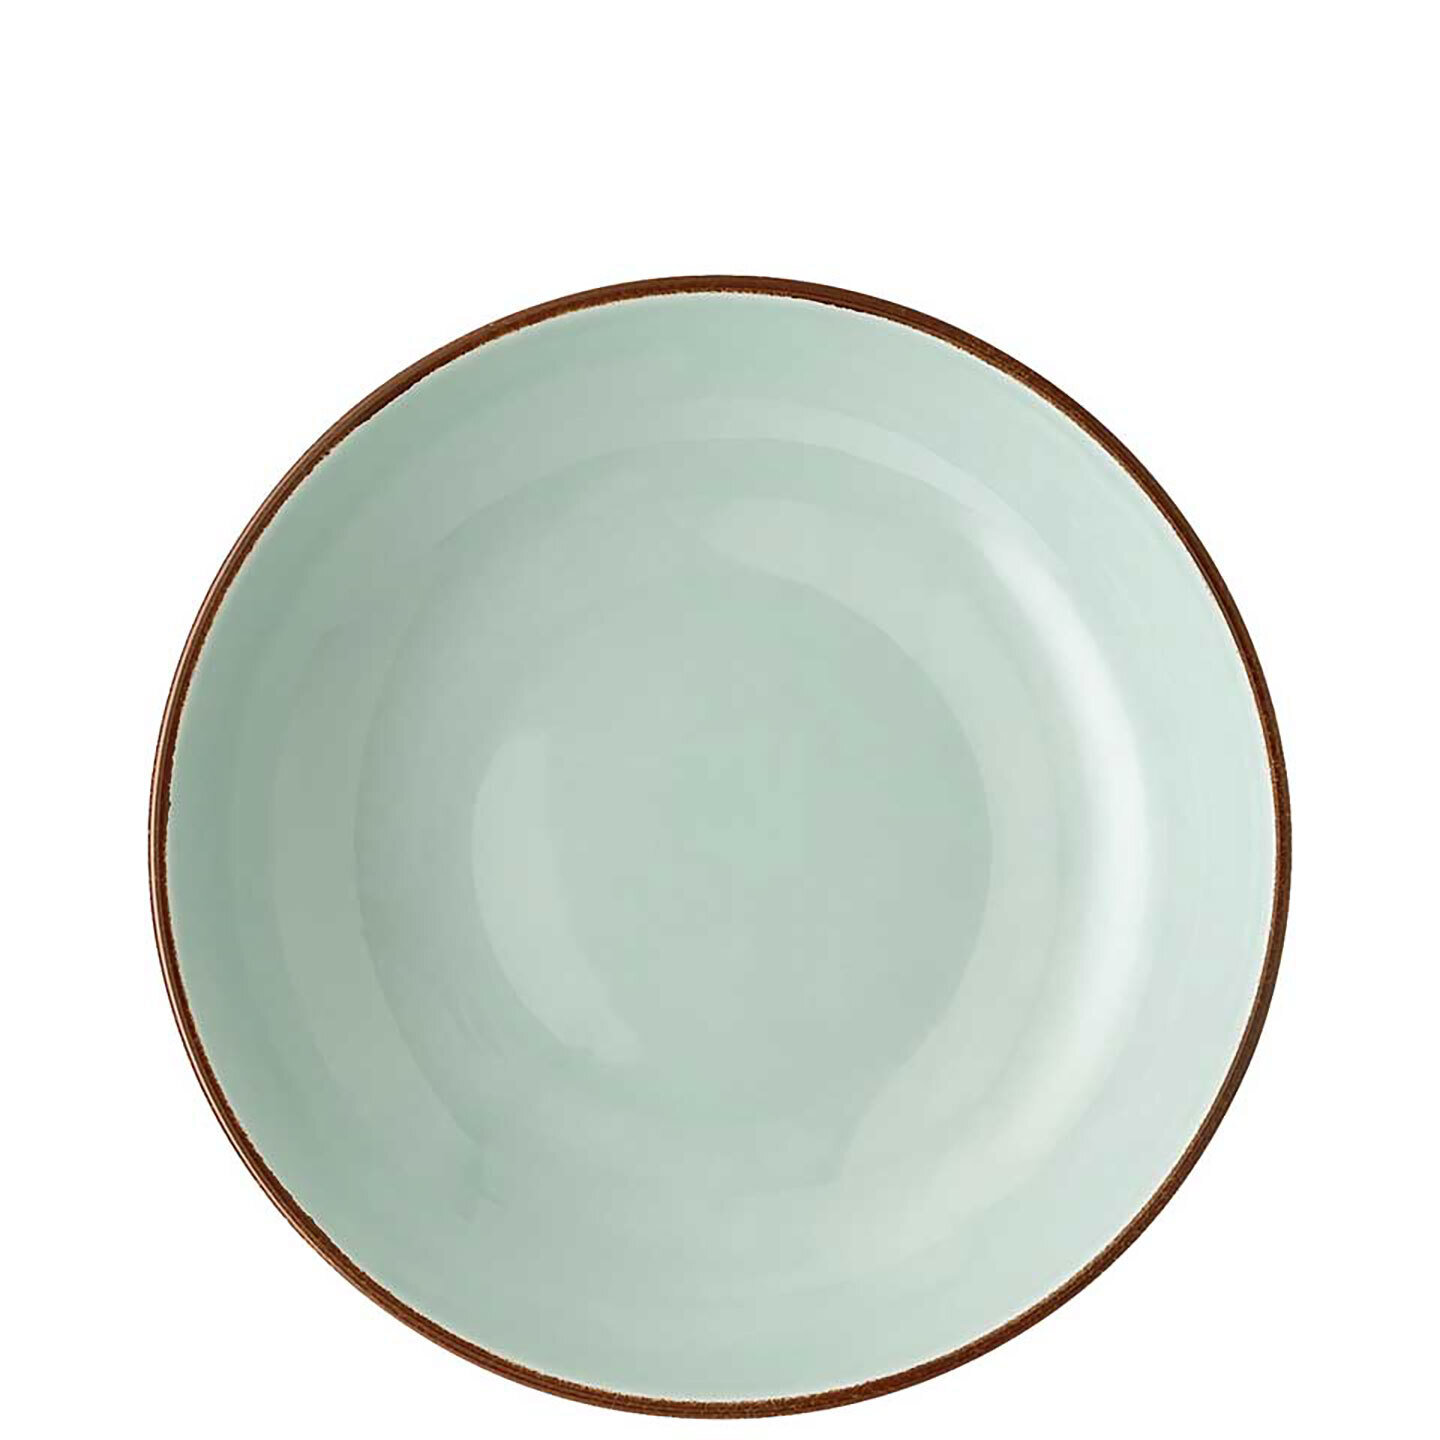 Rosenthal Profi Casual Mint Gourmet Plate Serving Bowl Shallow 10660-405406-31527